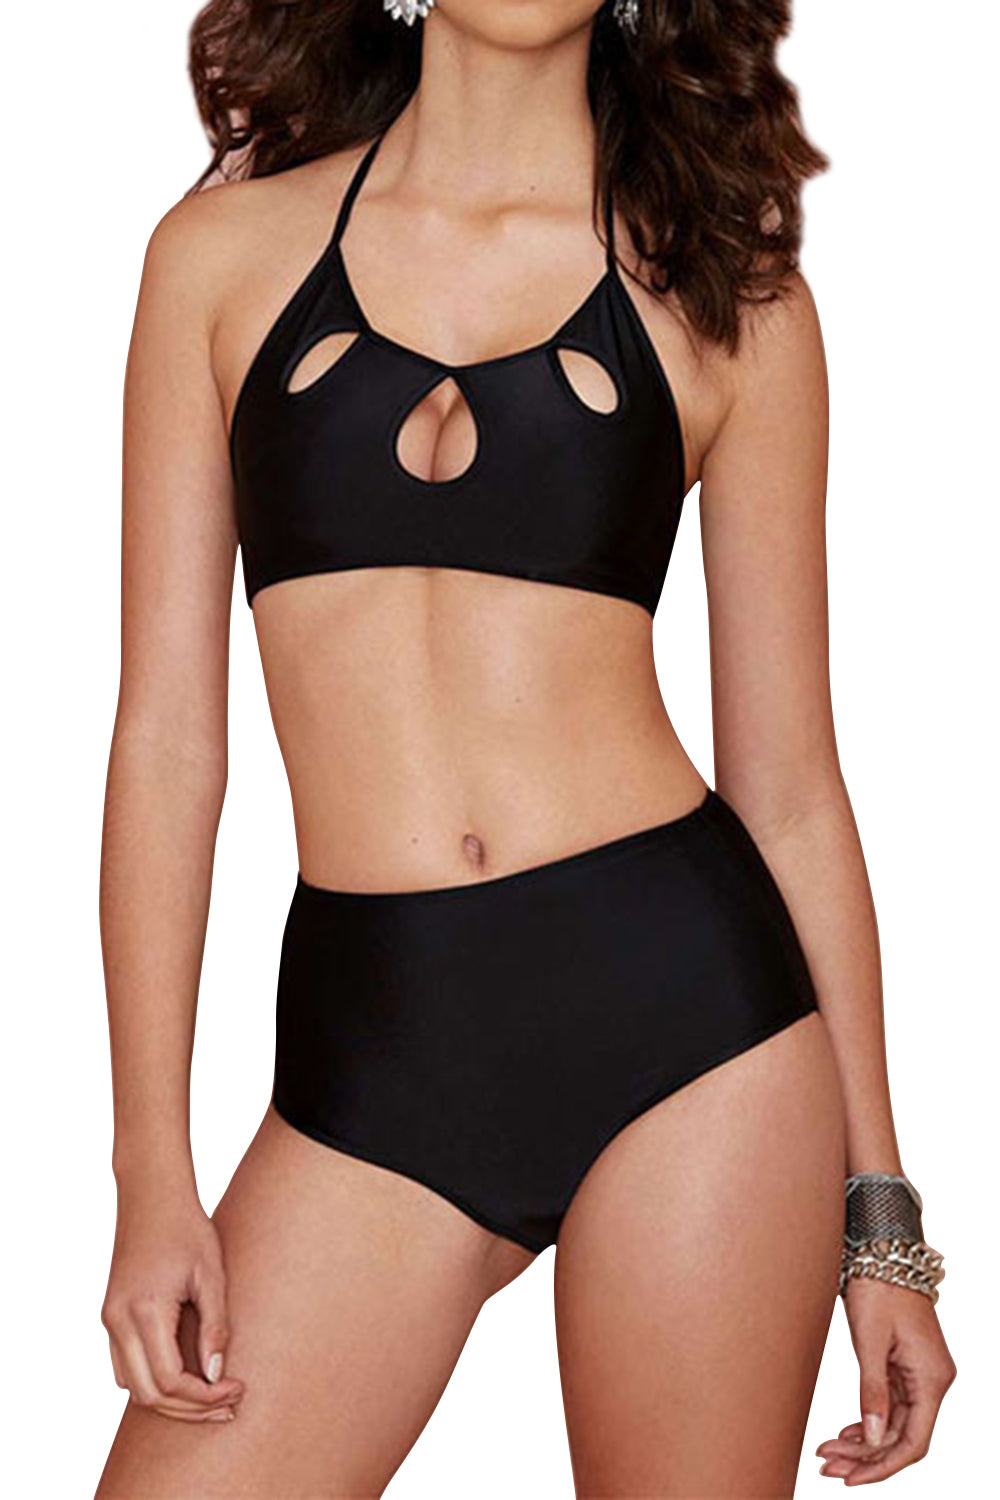 Iyasson Black Hollowed out Halter Bikini Sets